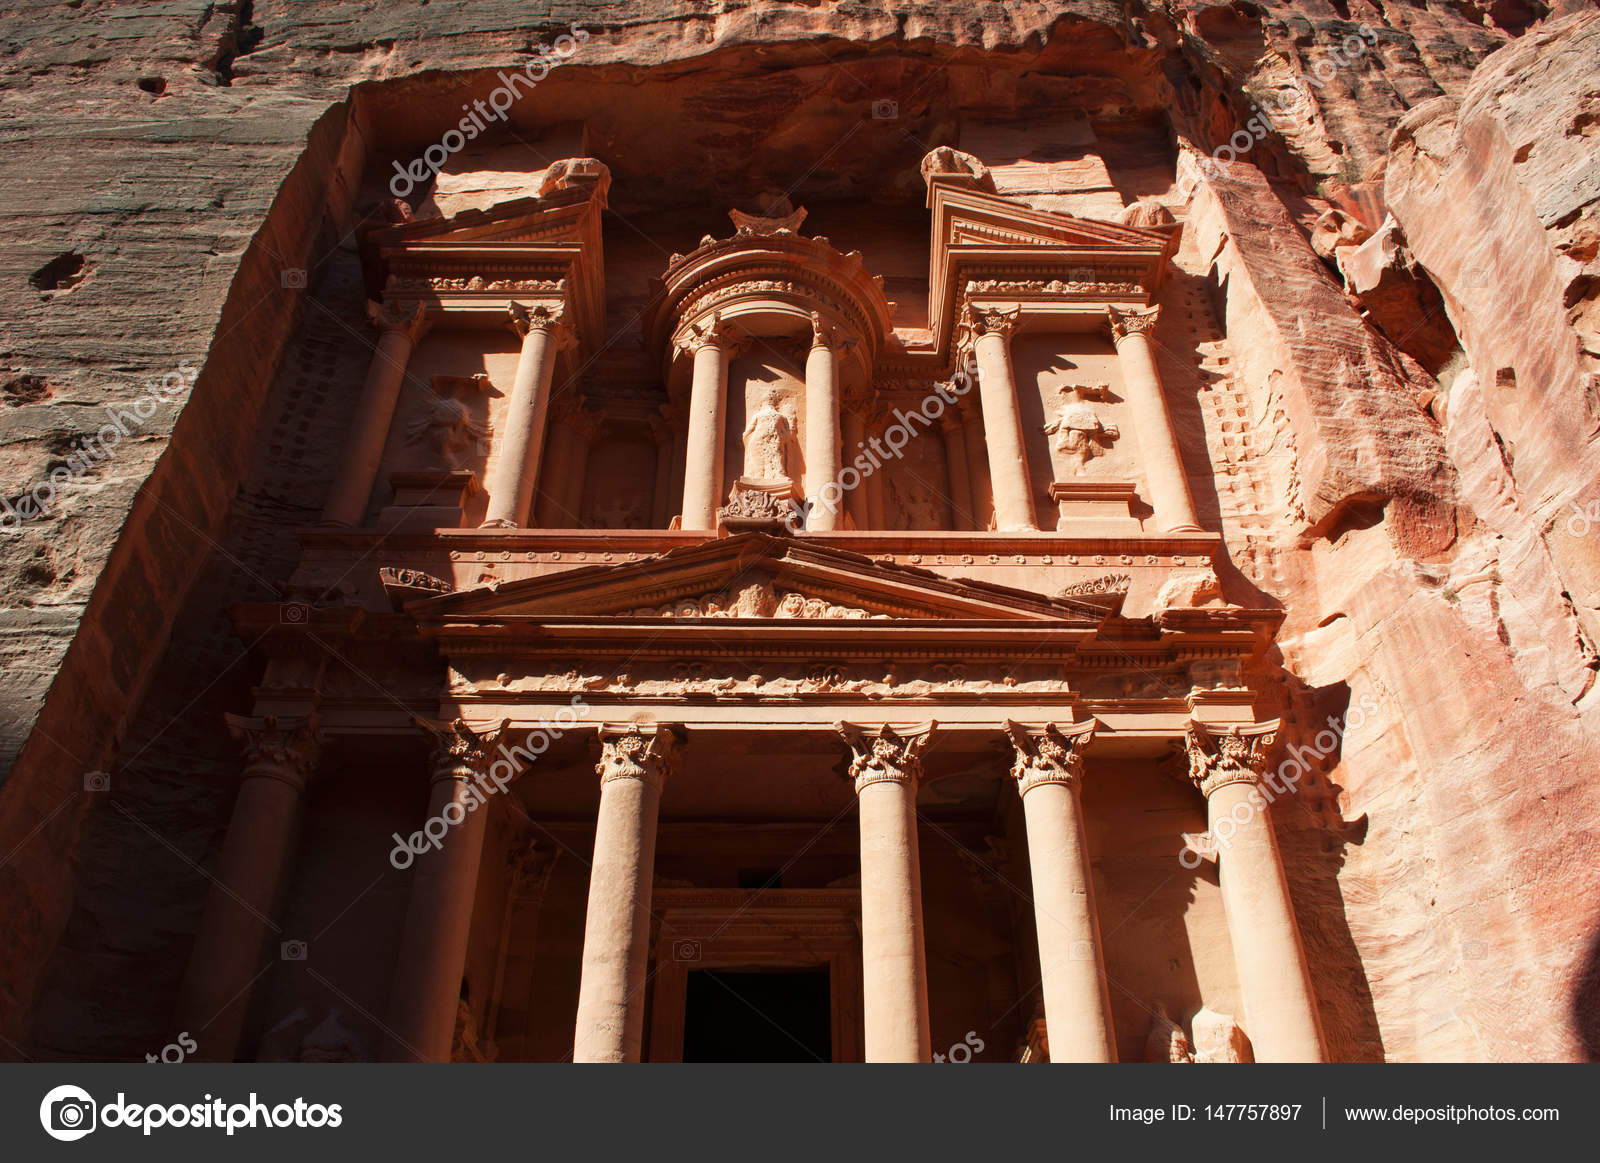 famous temple in jordan